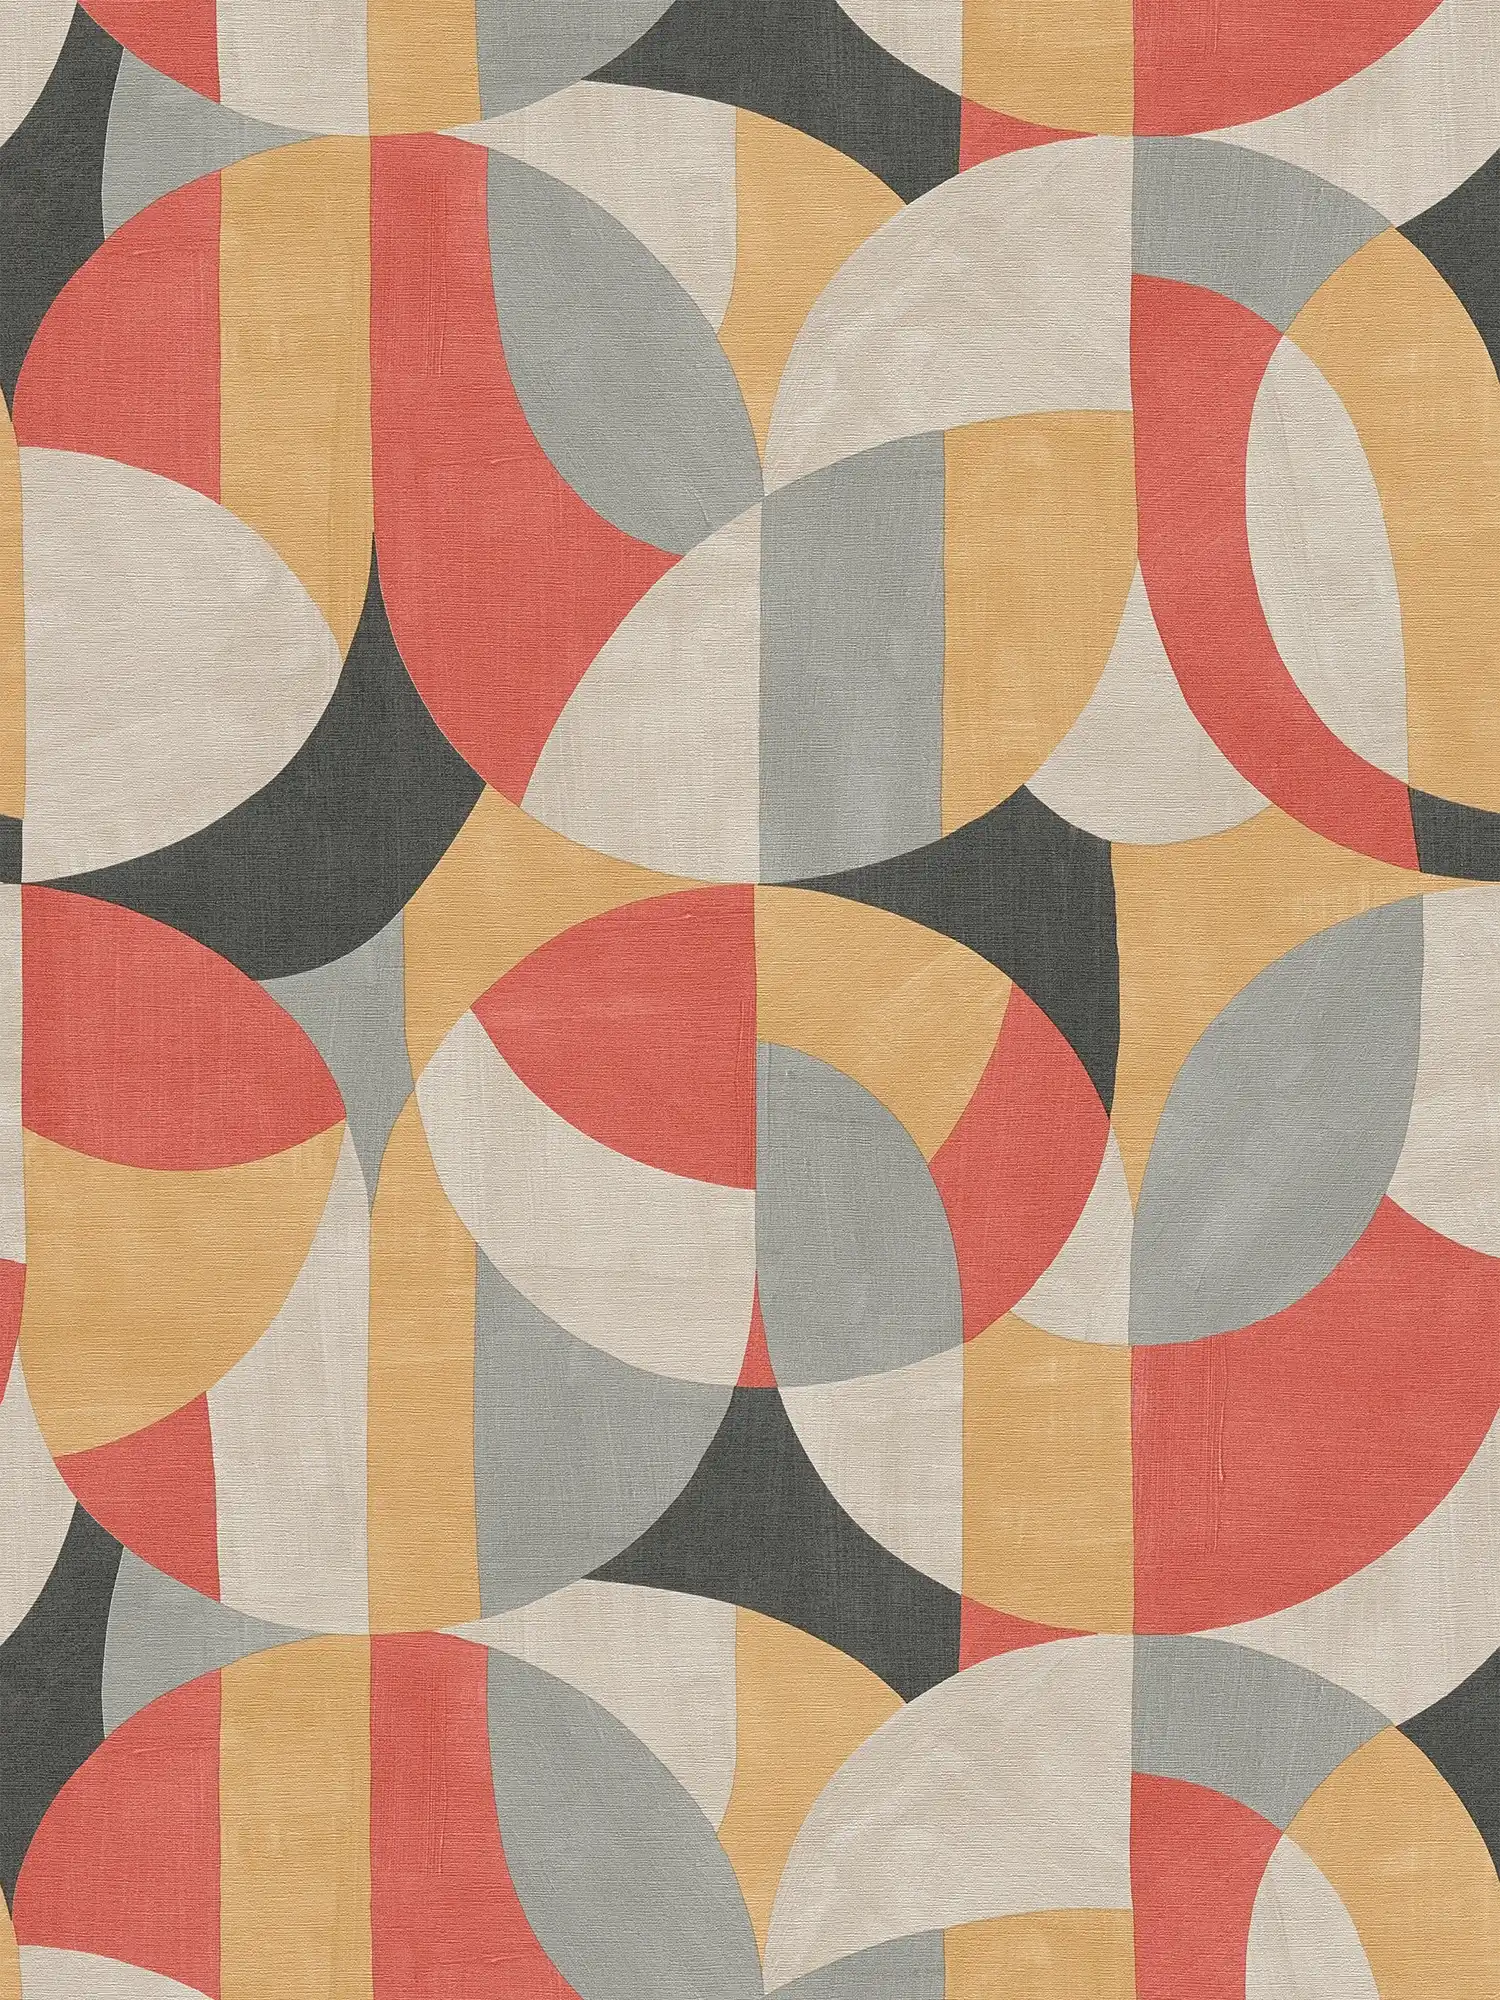 Carta da parati 3D in tessuto non tessuto in stile Bauhaus geometrico - grigio, beige, rosso
